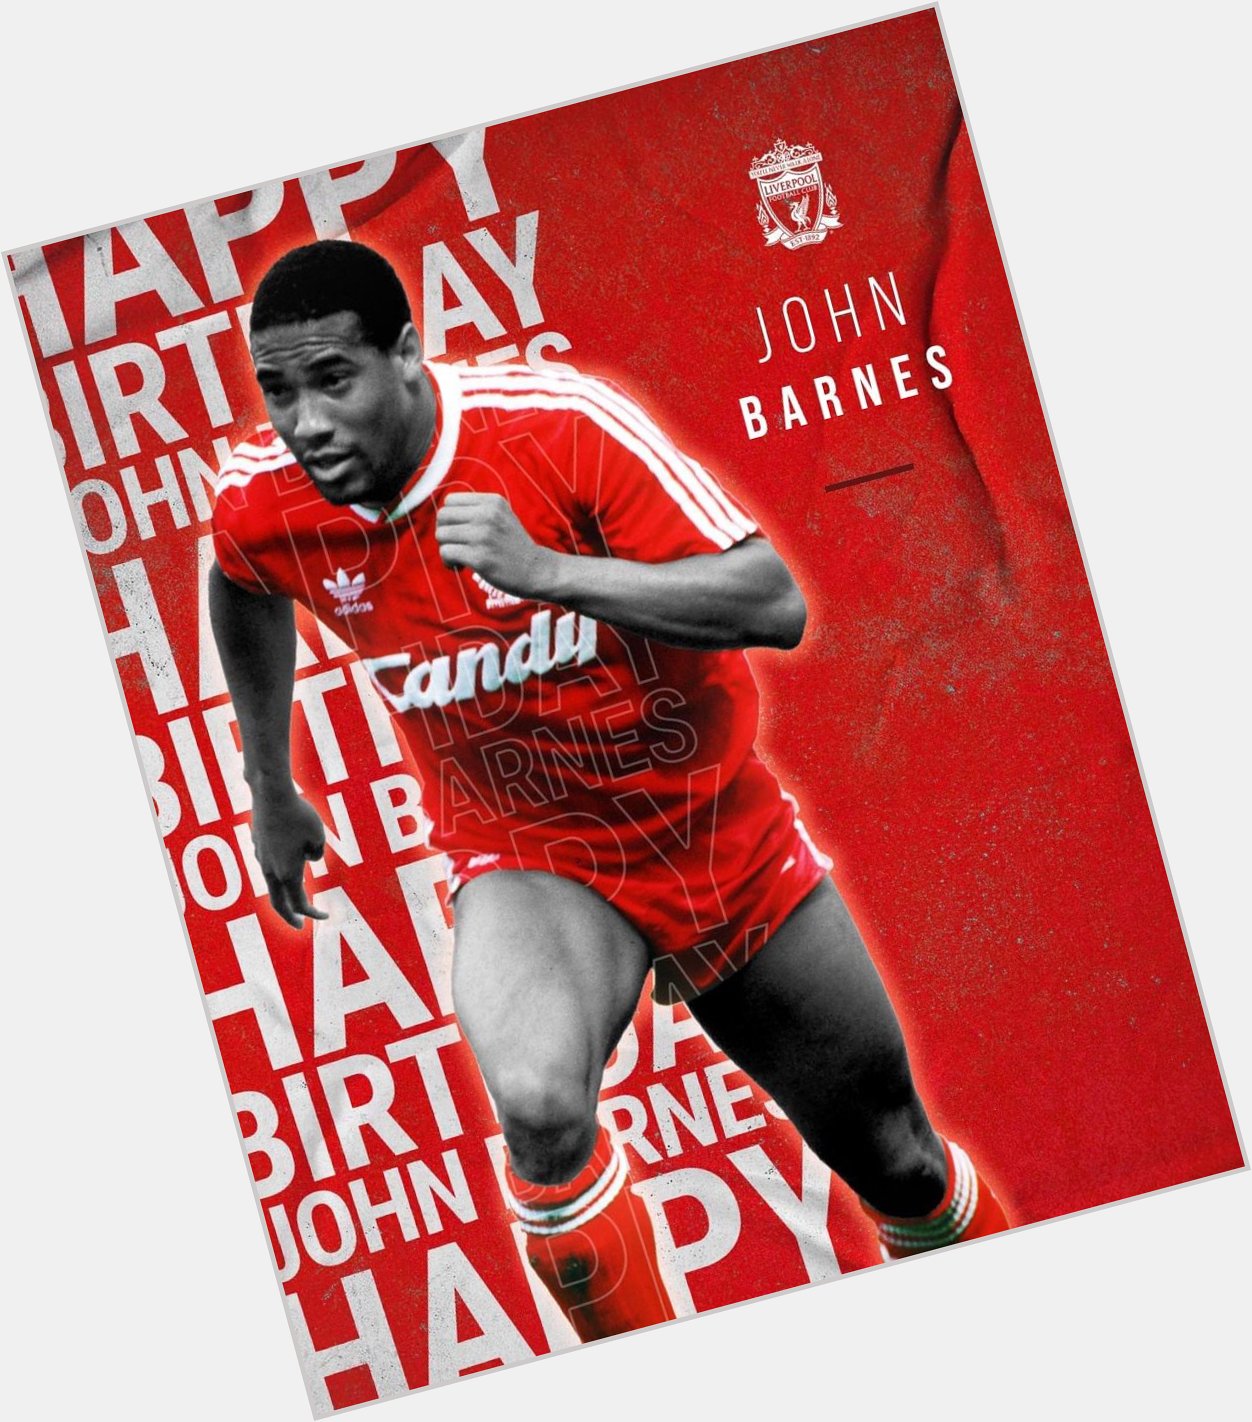 Wishing Reds legend John Barnes a very happy birthday!   